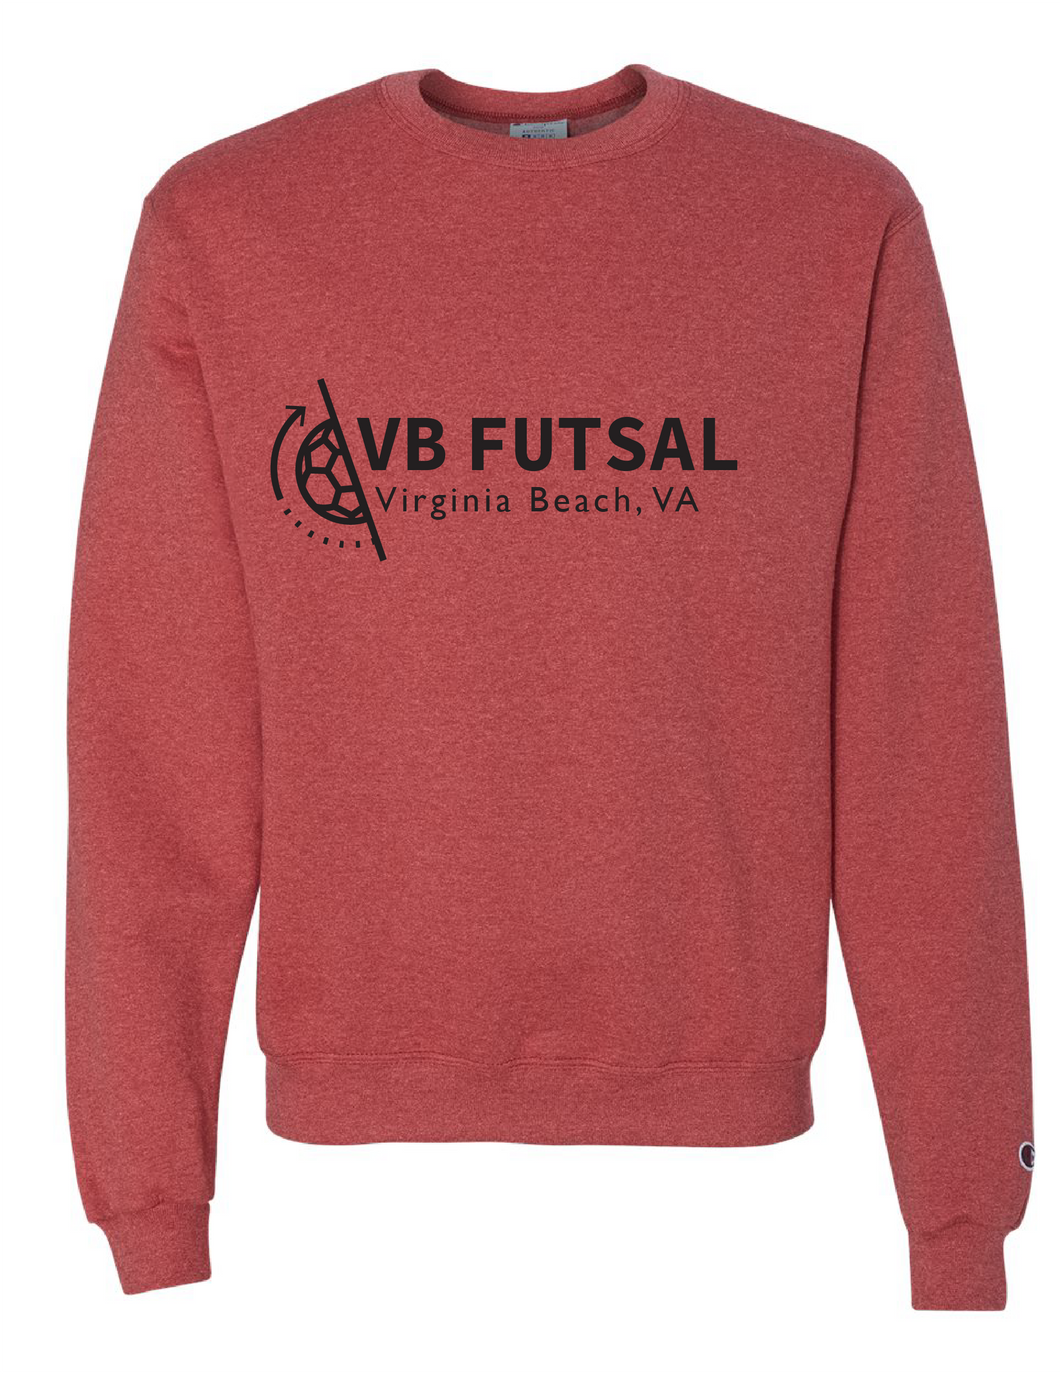 Crewneck Sweatshirt / Heather Red / VB FUTSAL